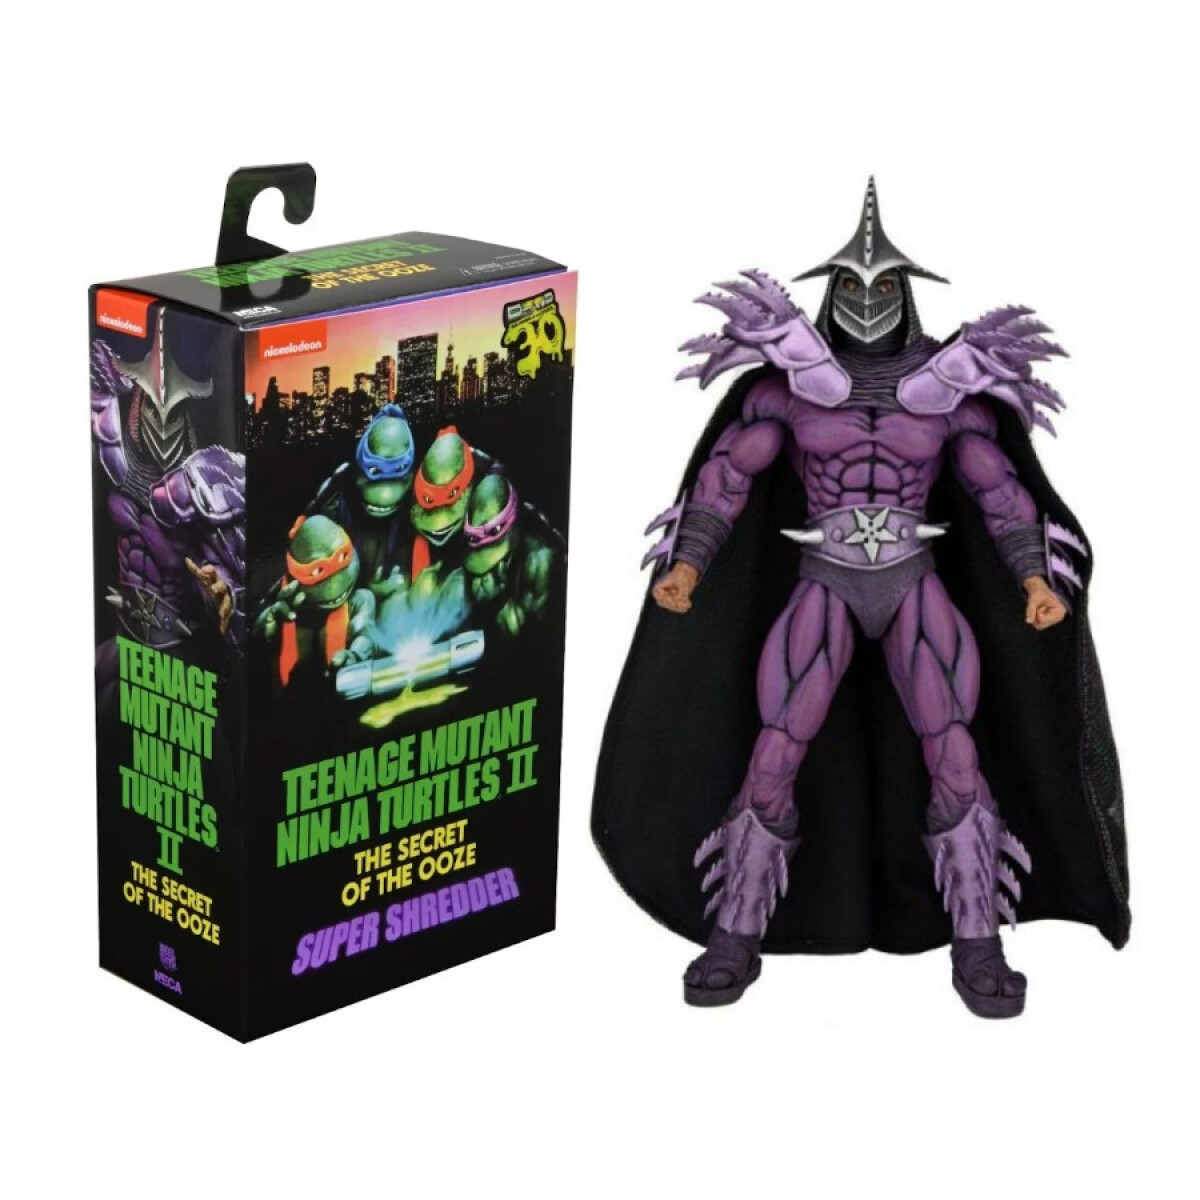 Super Shredder The Secret ot the Ooze Tortugas Ninja TMNT 